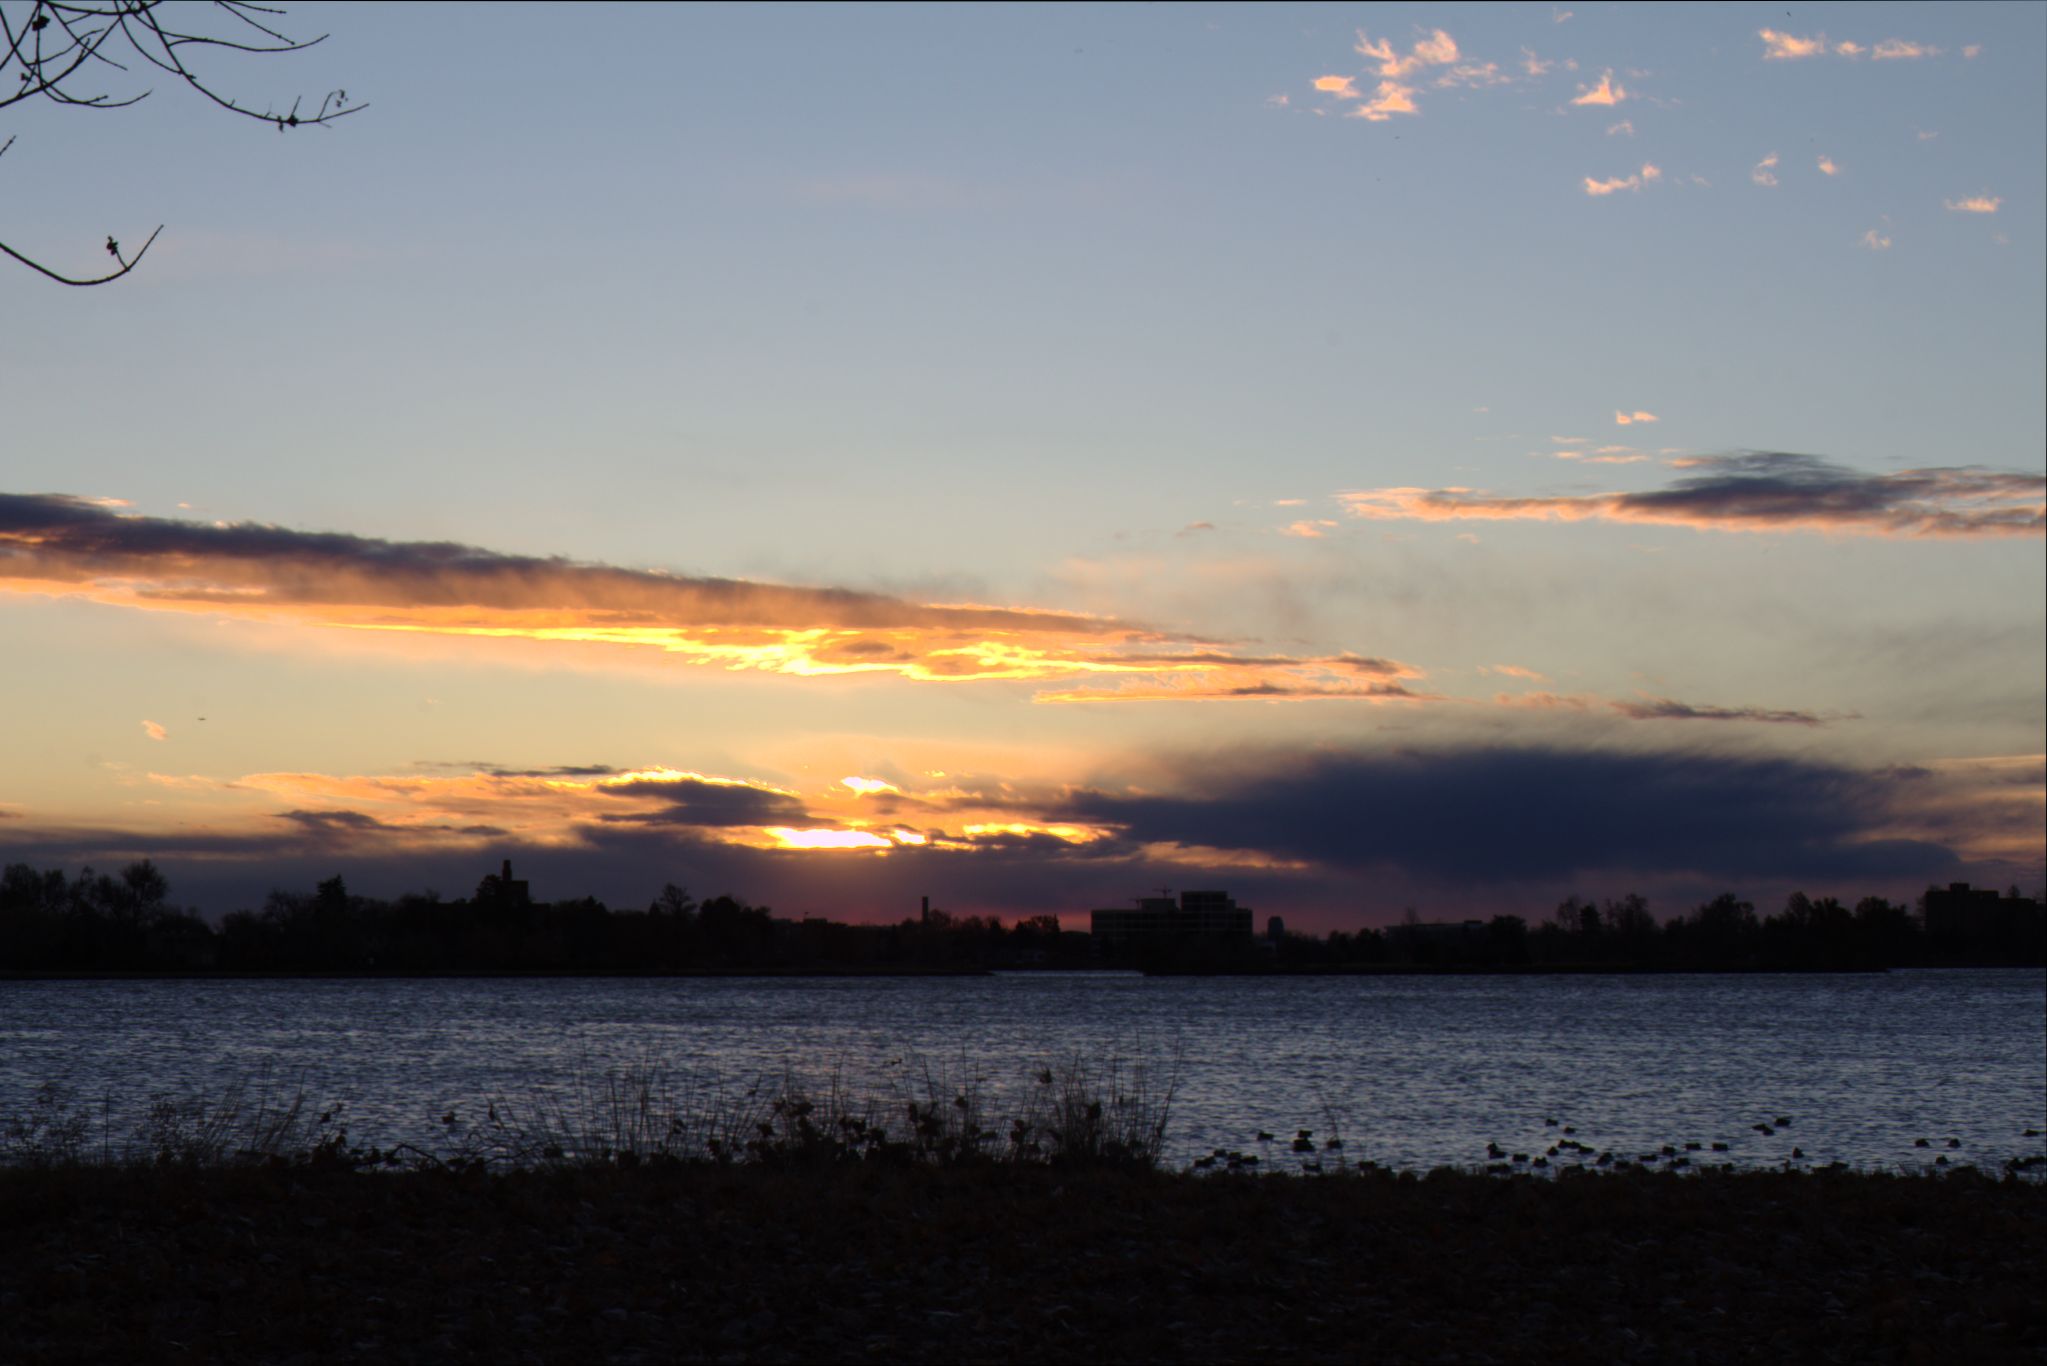 Sunrise at Sloan's Lake